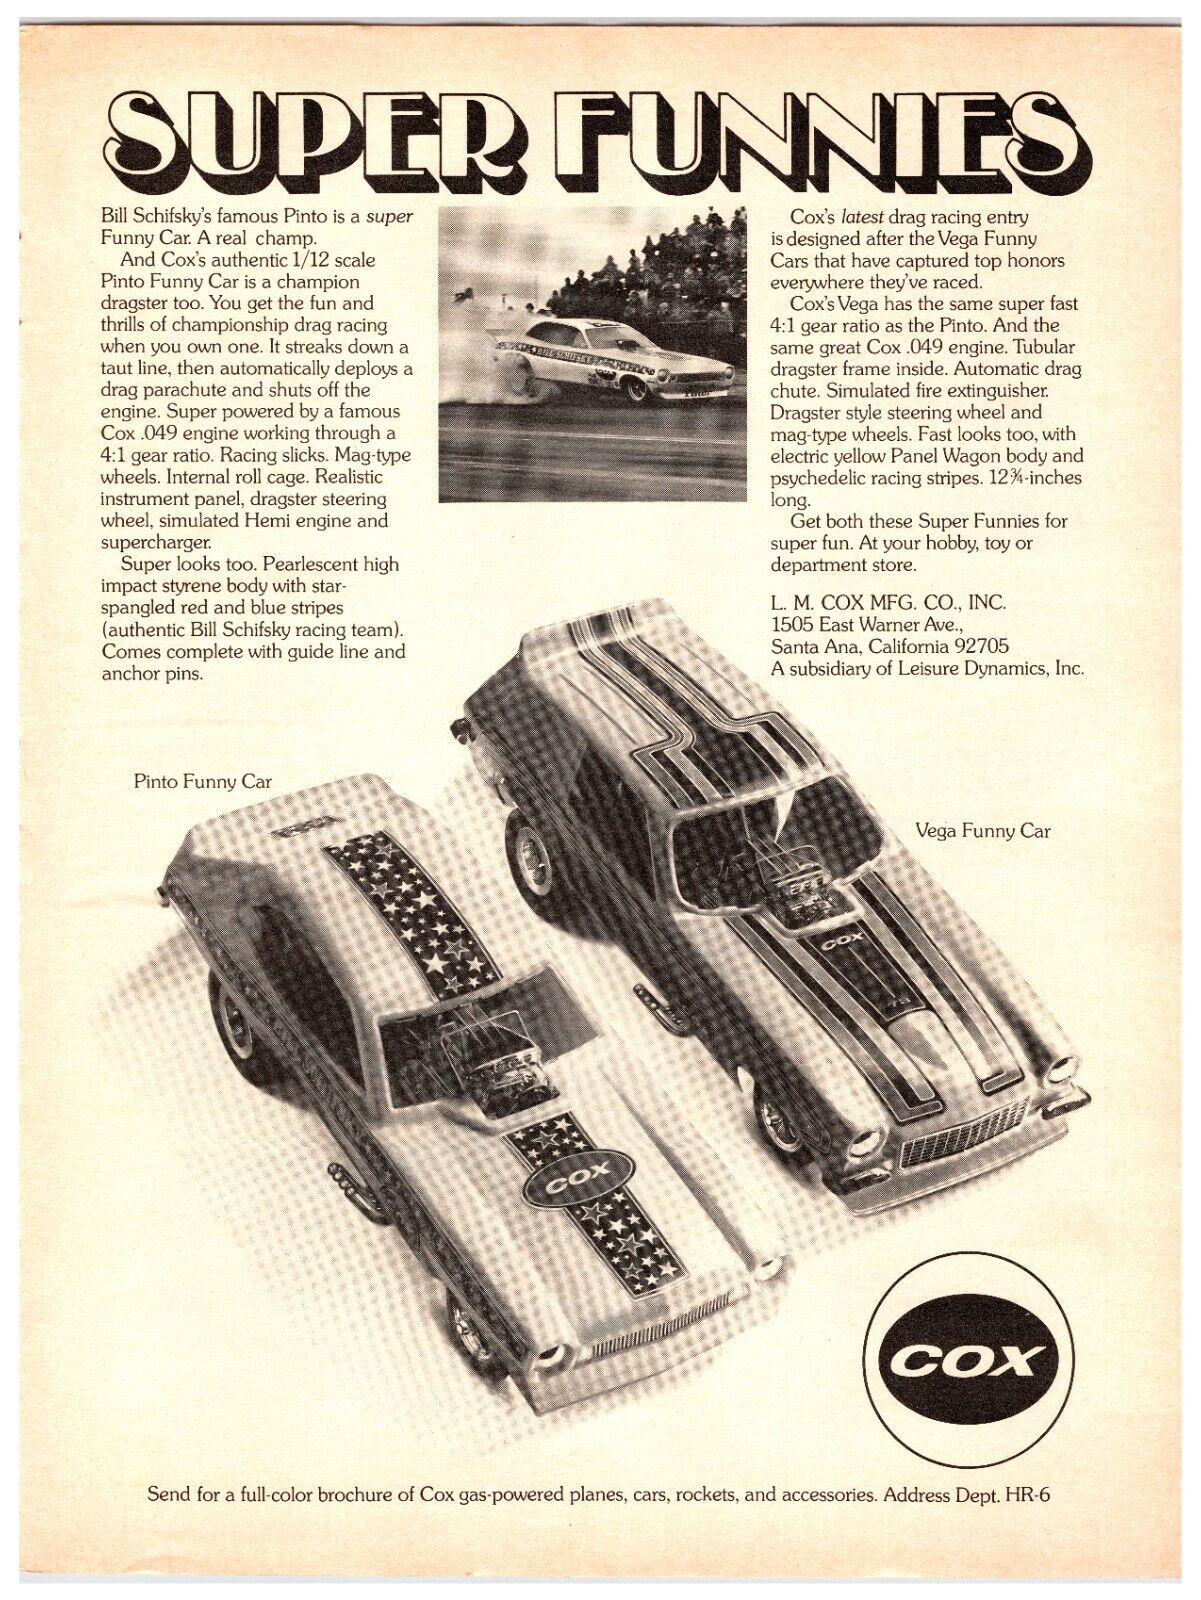 Original 1973 Cox Super Funnies Toy Cars - Print Advertisement (8x11) *Vintage*